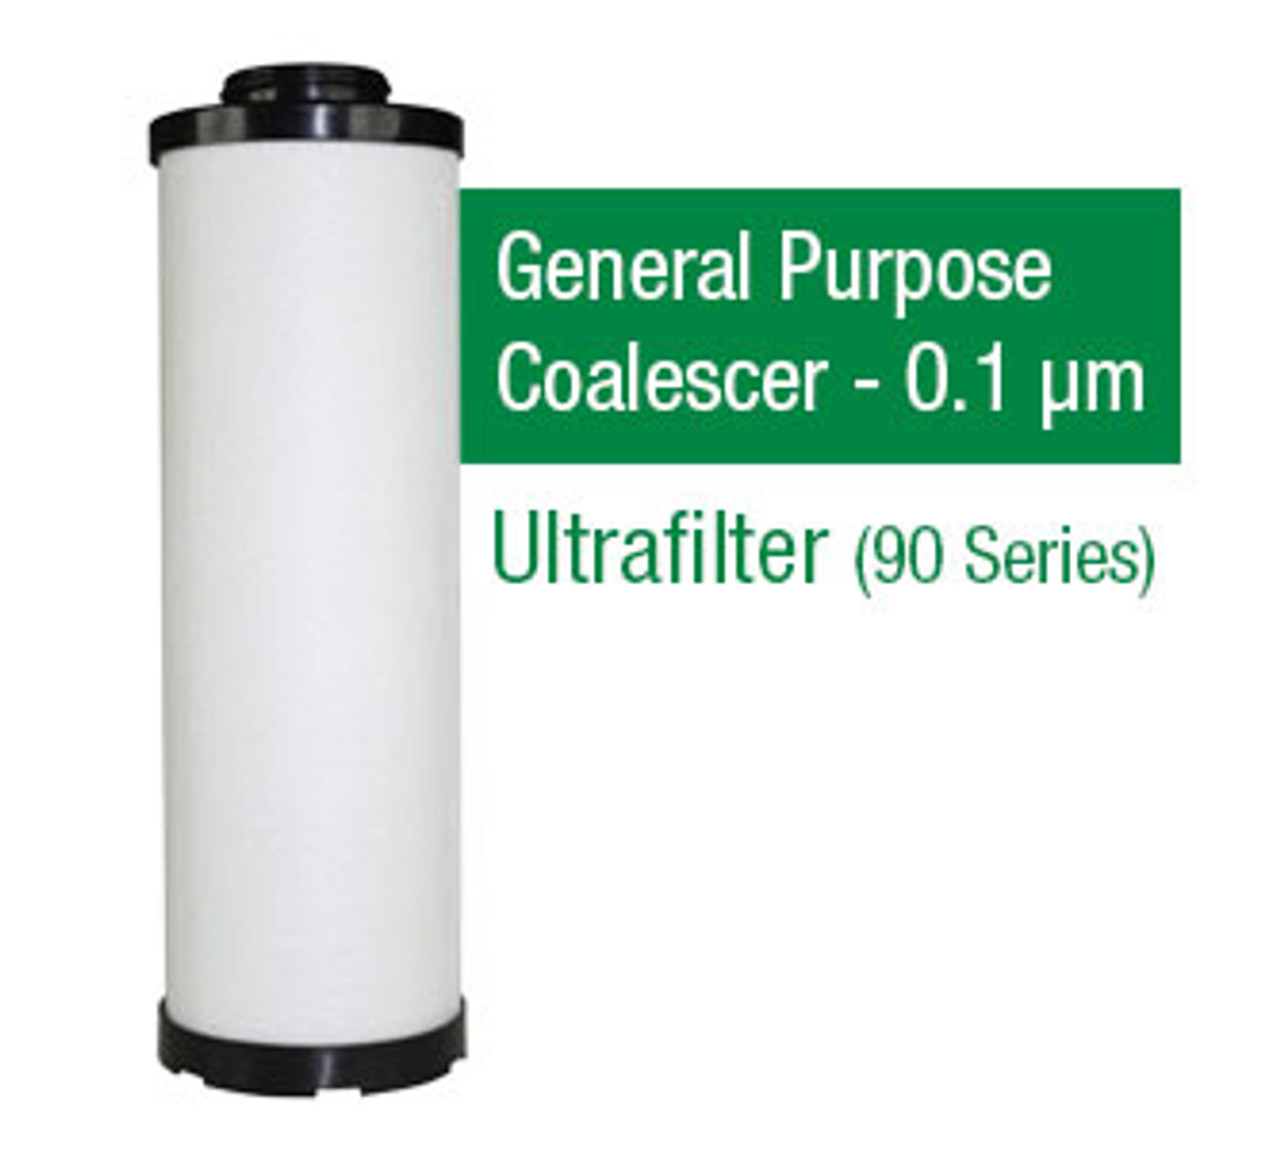 UF0410XO - Grade XO - General Purpose Coalescer - 0.1 um (MF04/10/AG0009RMF)